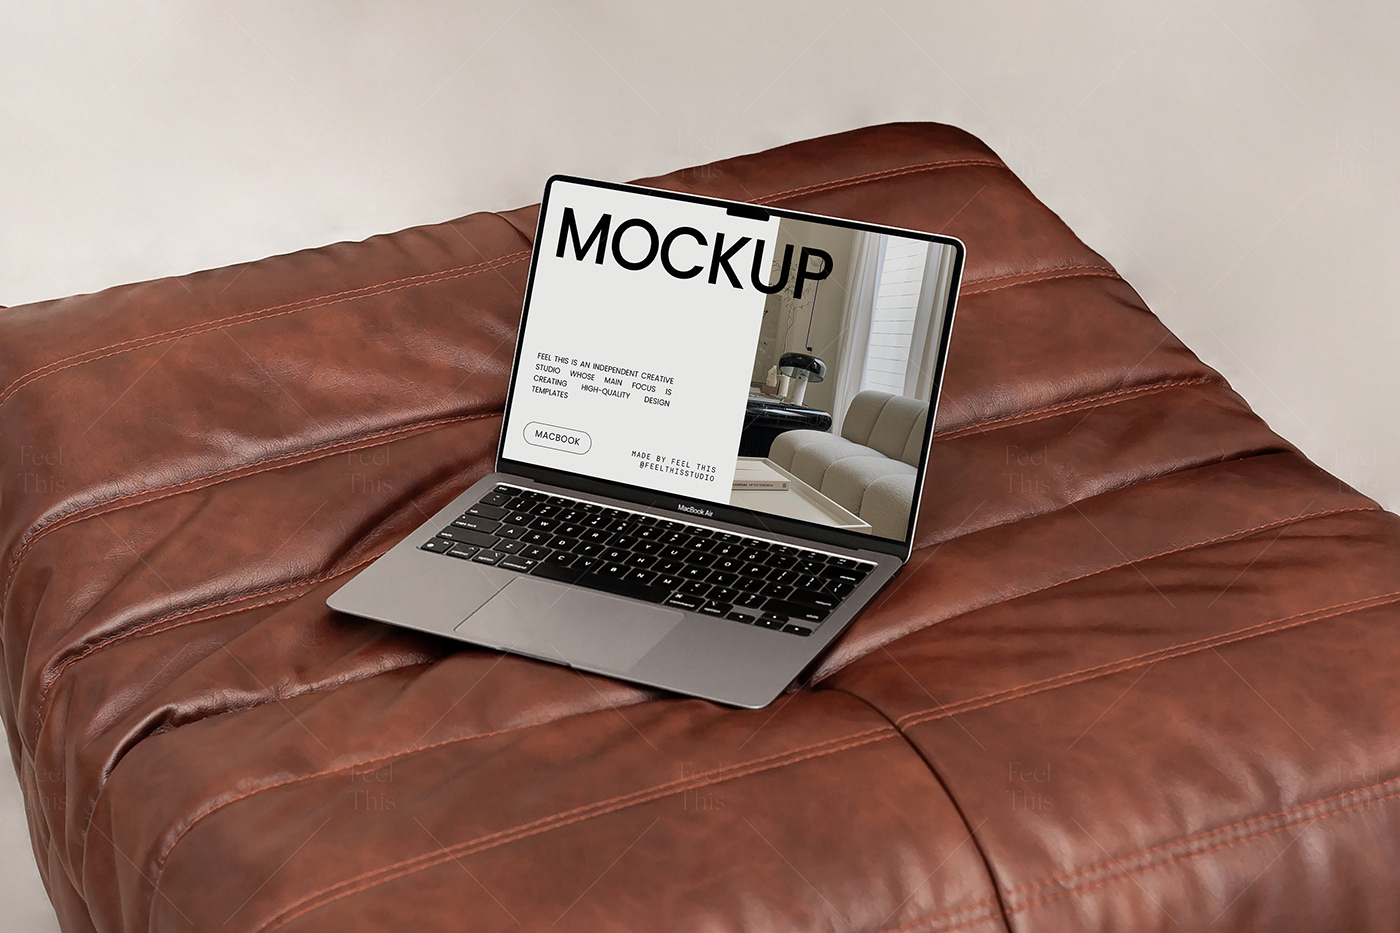 iPad iphone macbook download Mockup free freebie psd mock-up